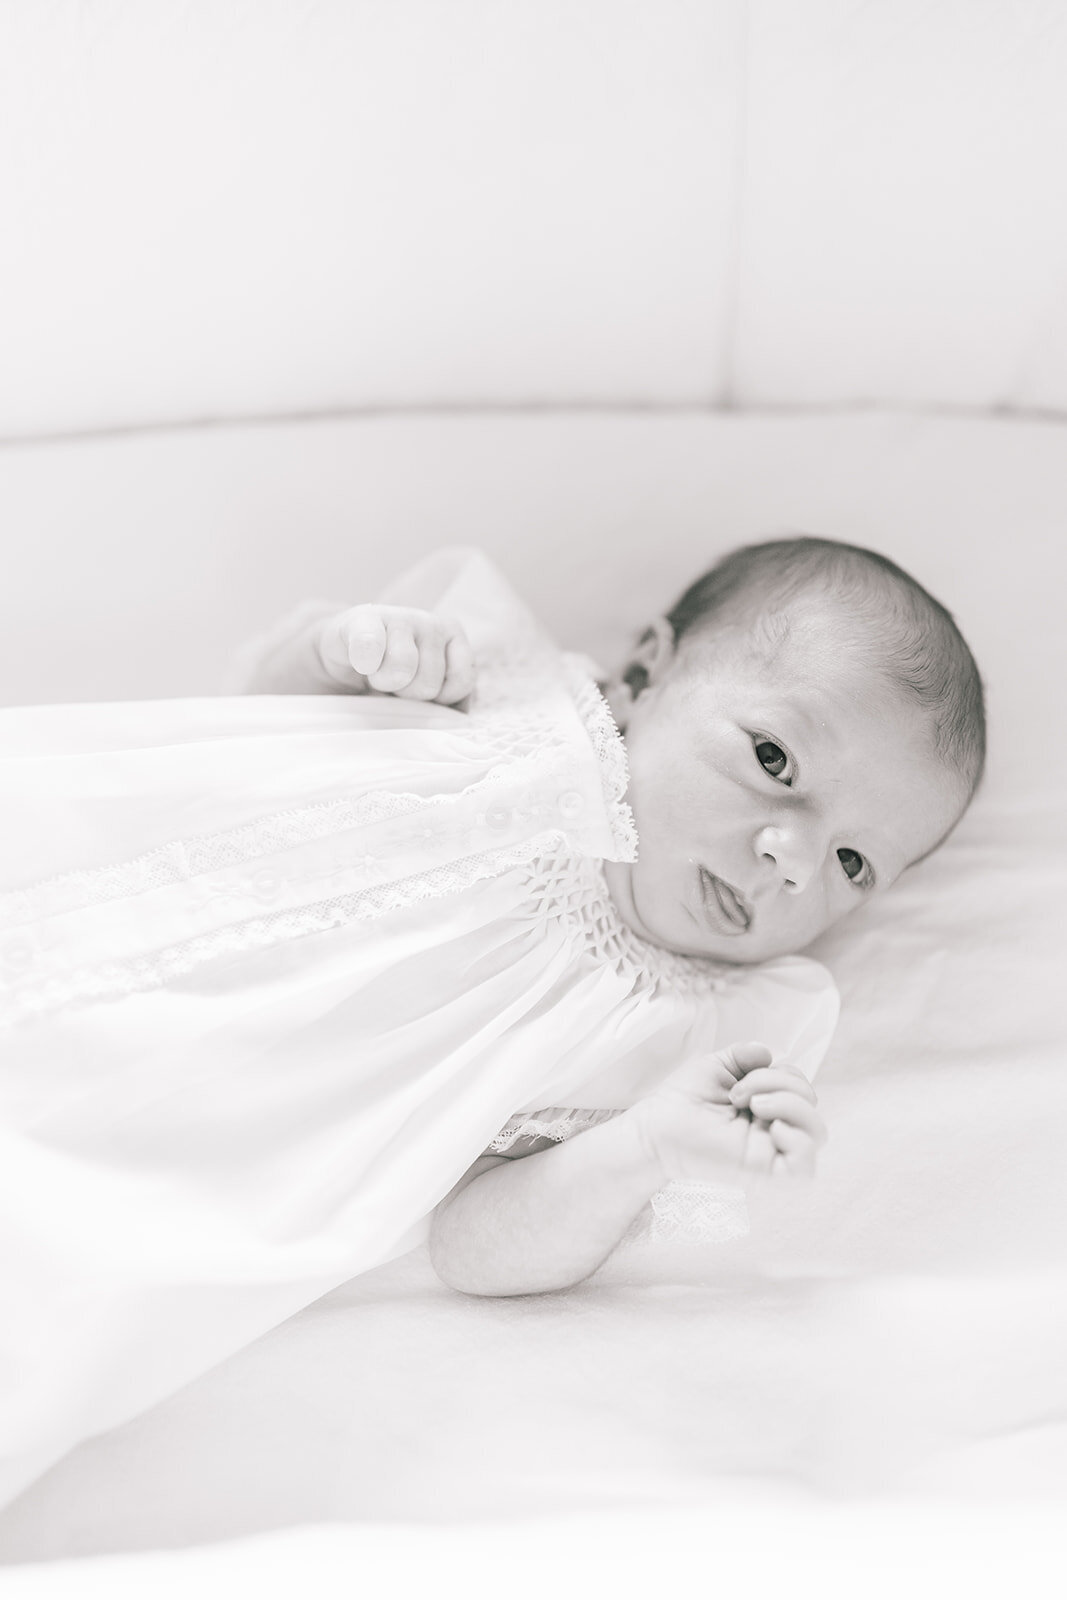 laura-foote-photography-hybrid-destination-wedding-family-motherhood-newborn-maternity-portrait-photographer-kansas-city-florida-worldwide-joliff-family-146